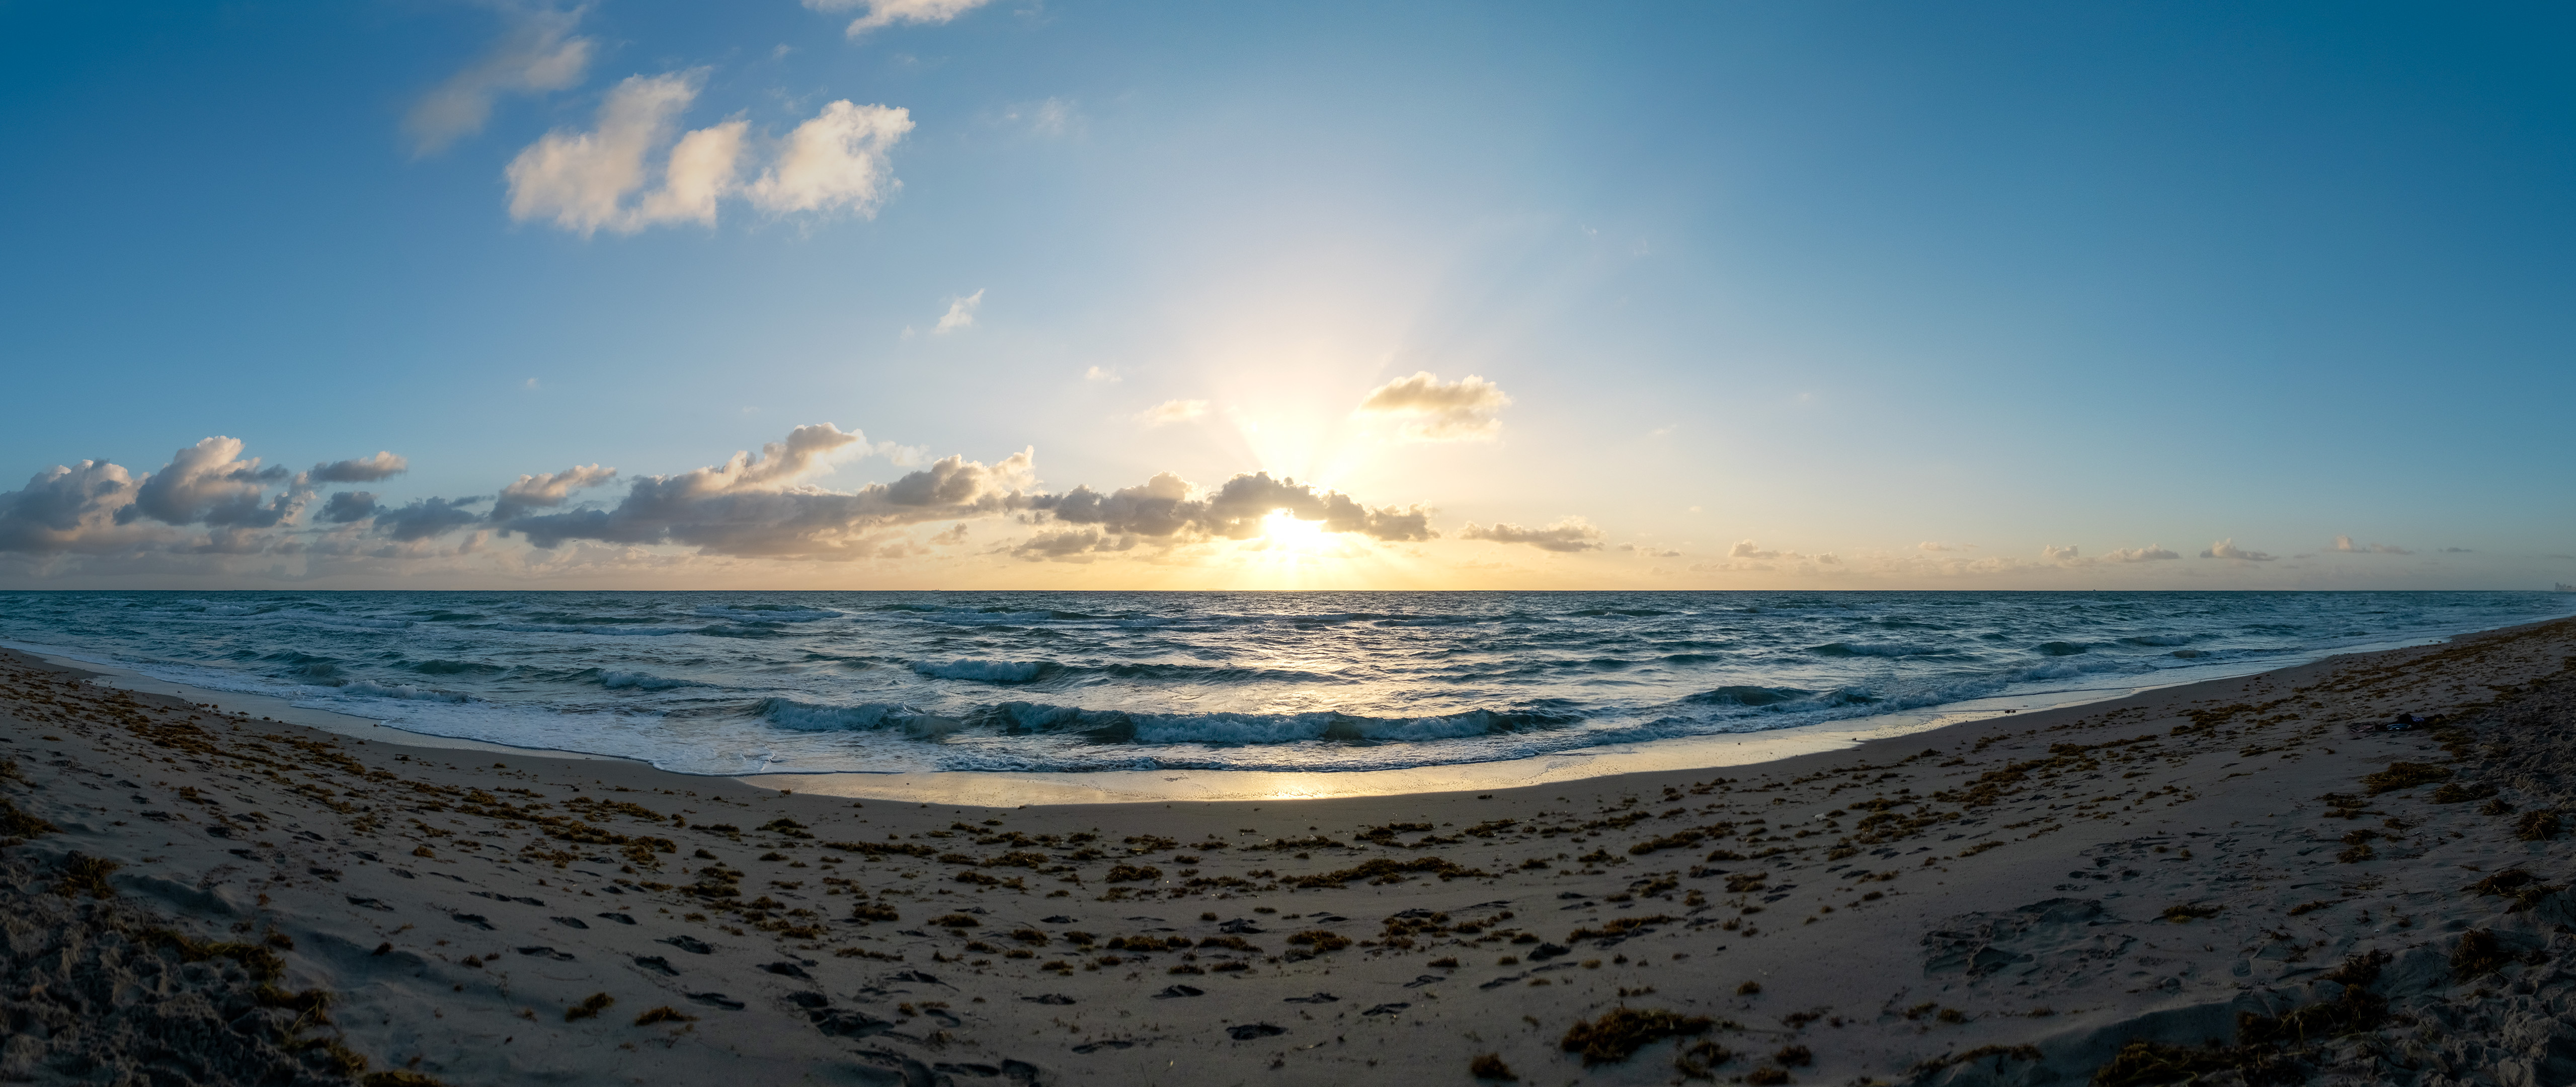 Florida Beach Sea Atlantic Ocean Sunrise Sky Horizon Clouds Water Sand Wide Angle Panorama 5120x2160